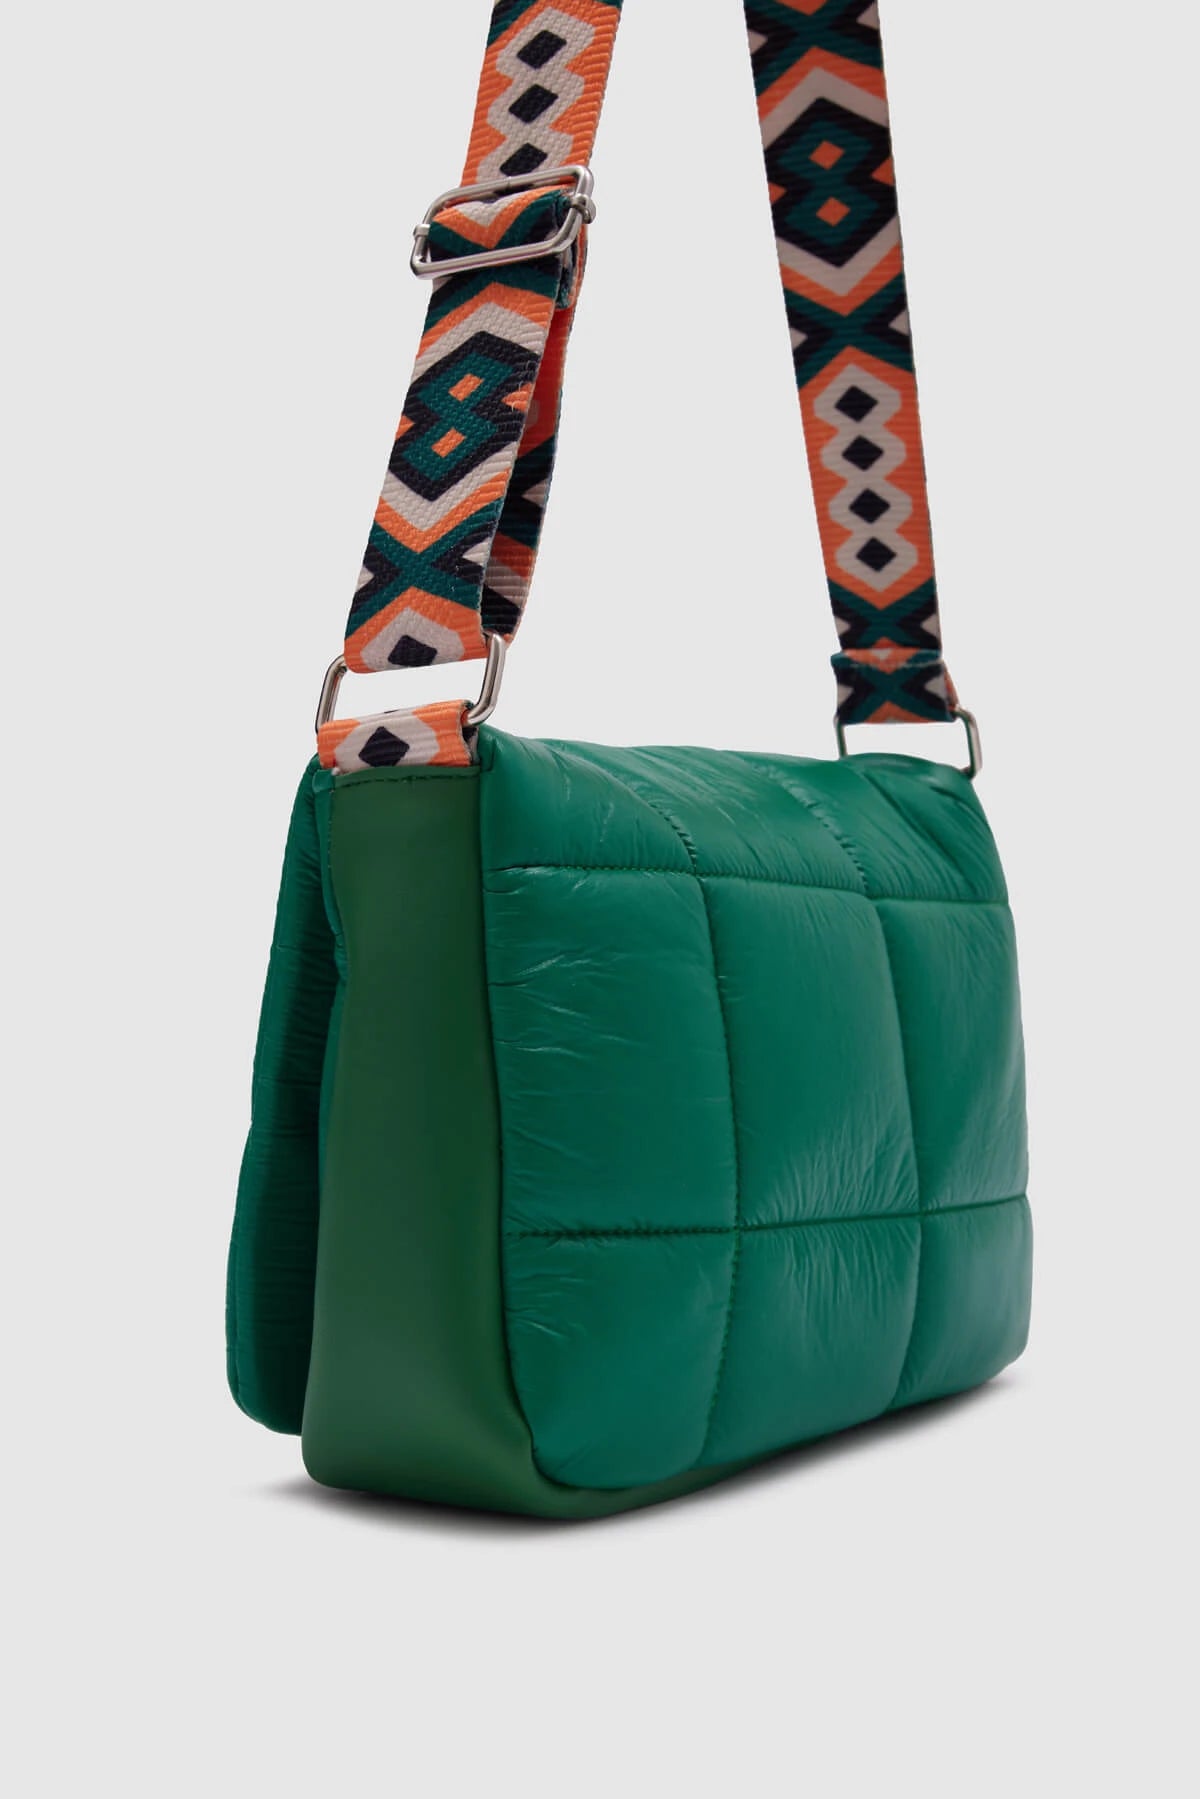 Lorenzo Quilted Color Crossbody Bag crossbody bag LUNARITY GARAGE Green  